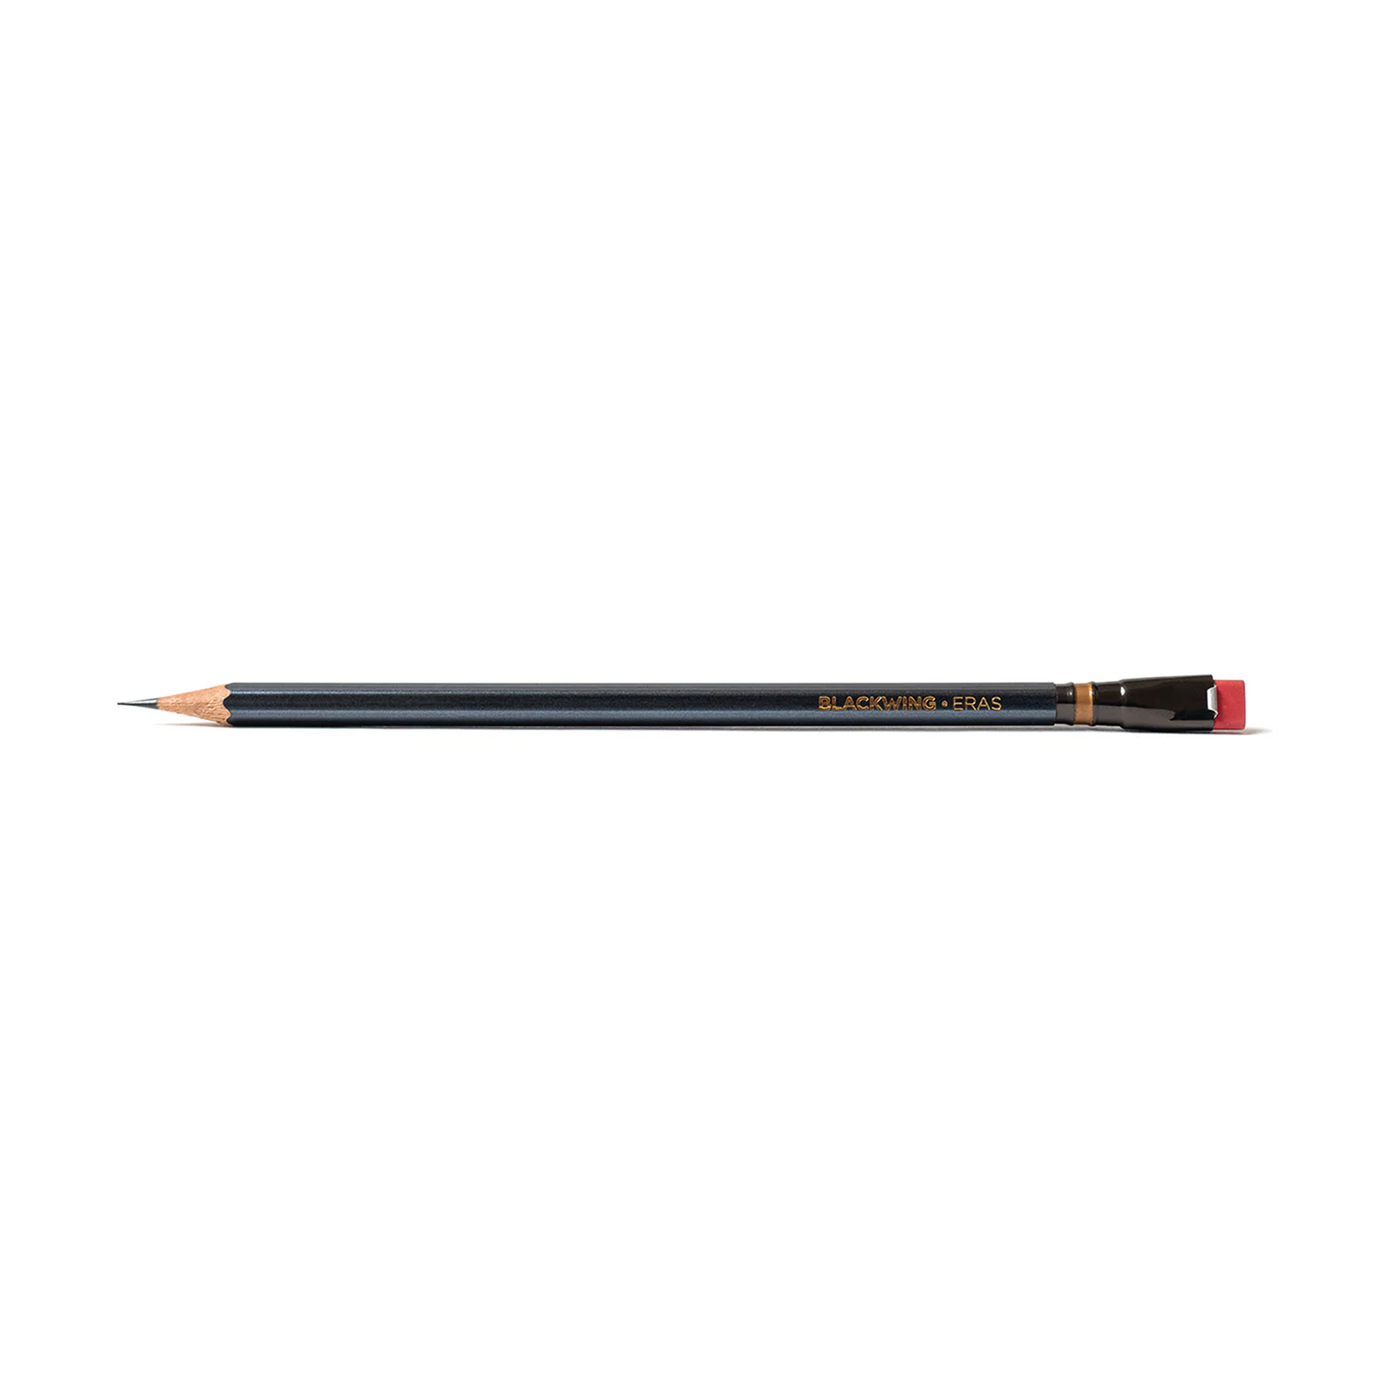 Blackwing Matte Pencils (12 Pack)